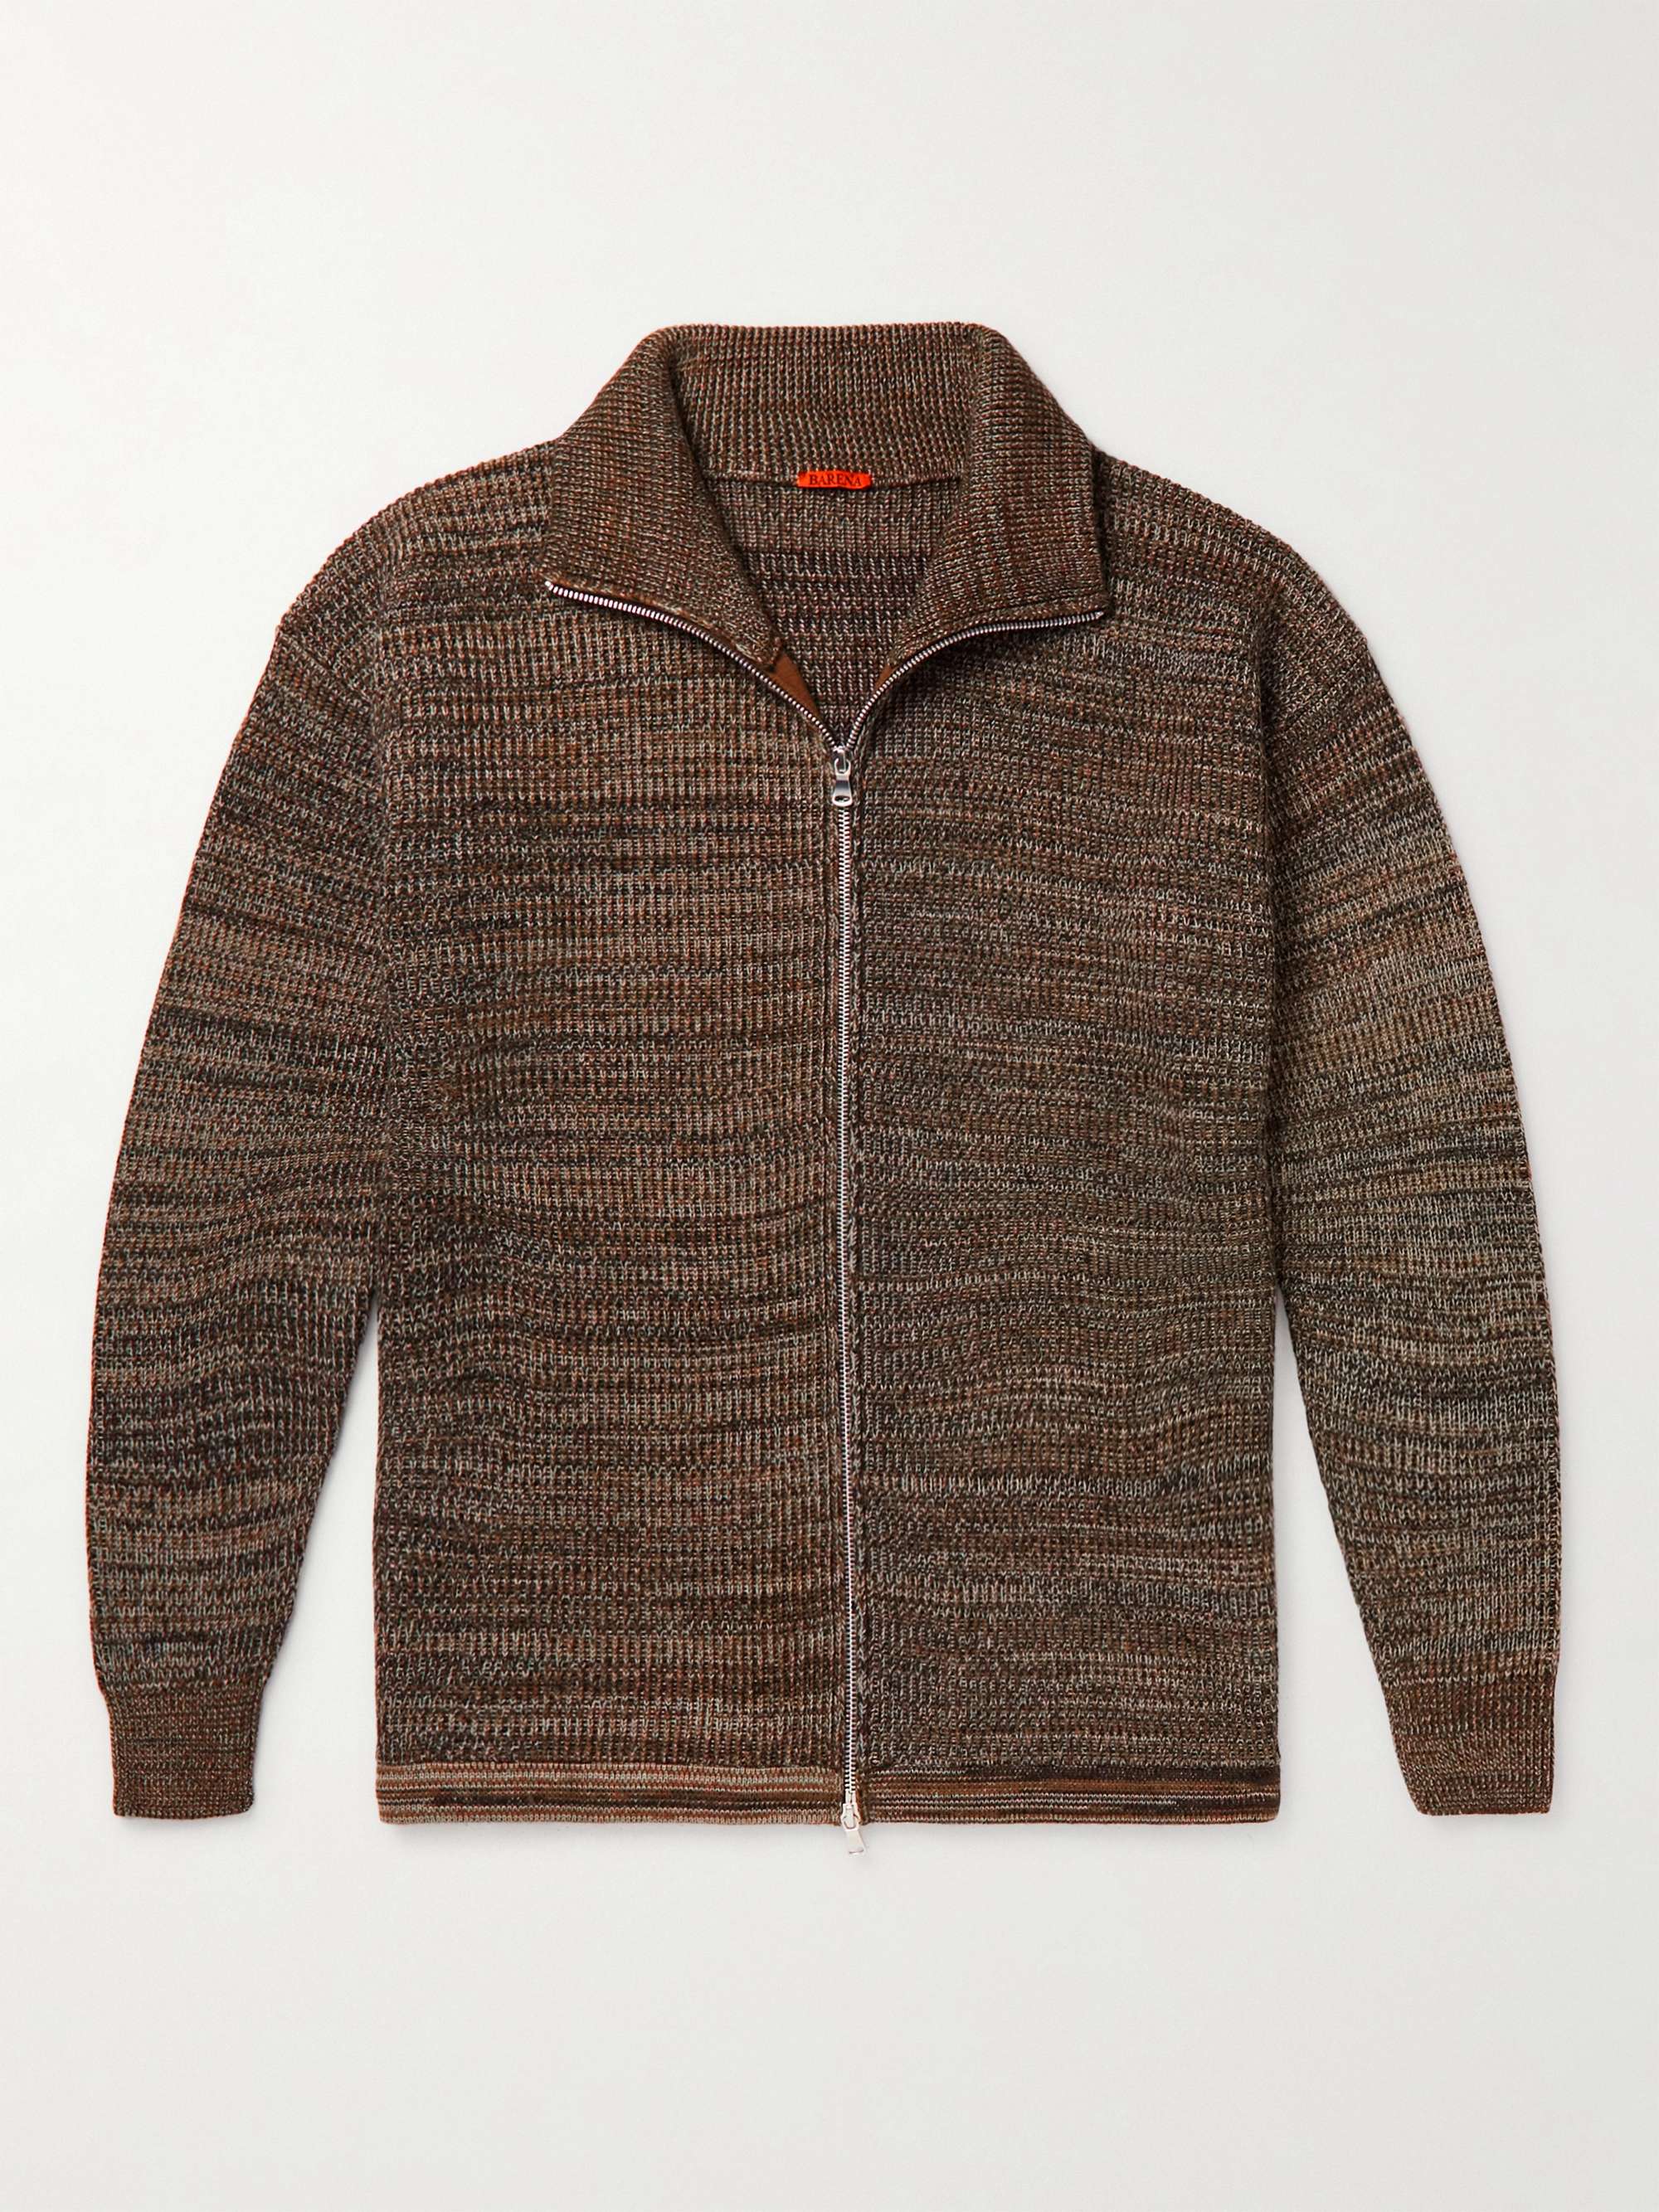 Brown Ribbed Wool Zip-Up Sweater | BARENA | MR PORTER